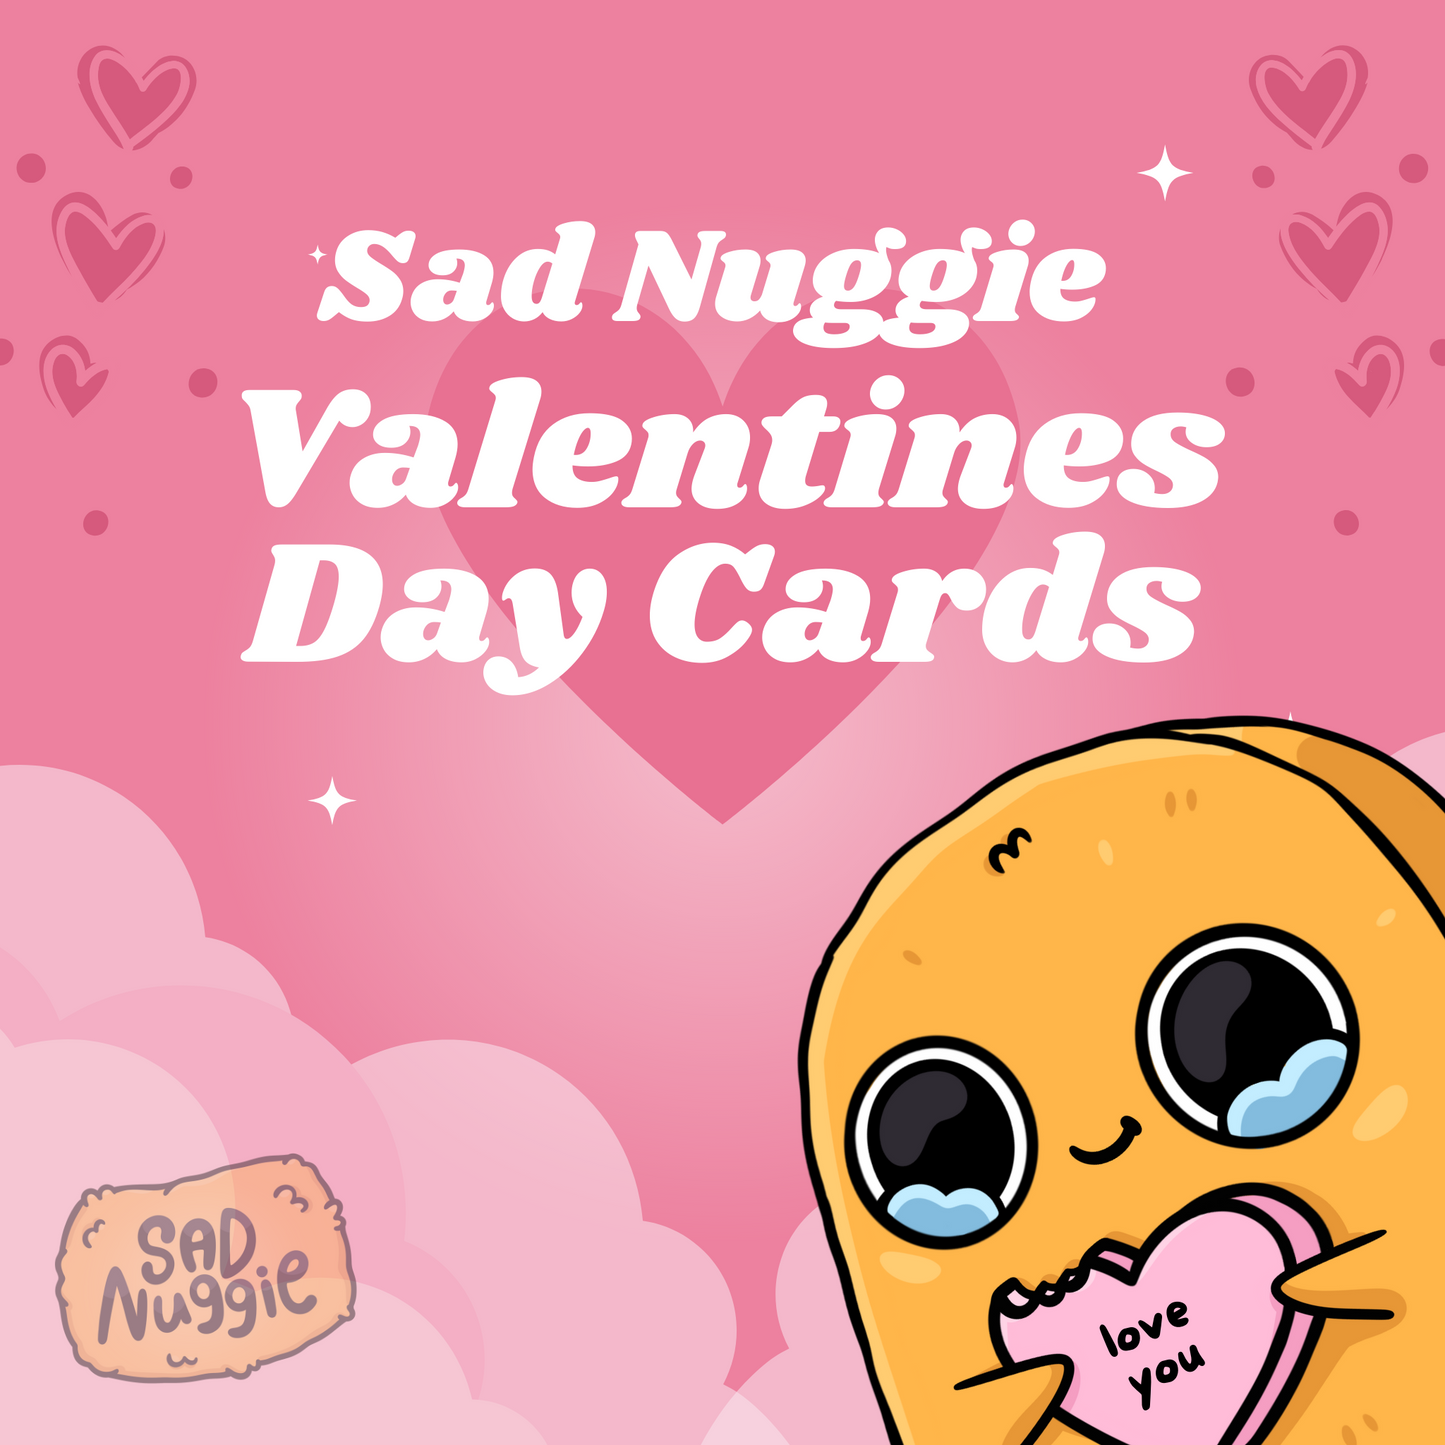 Sad Nuggie Valentines Cards (Print File)